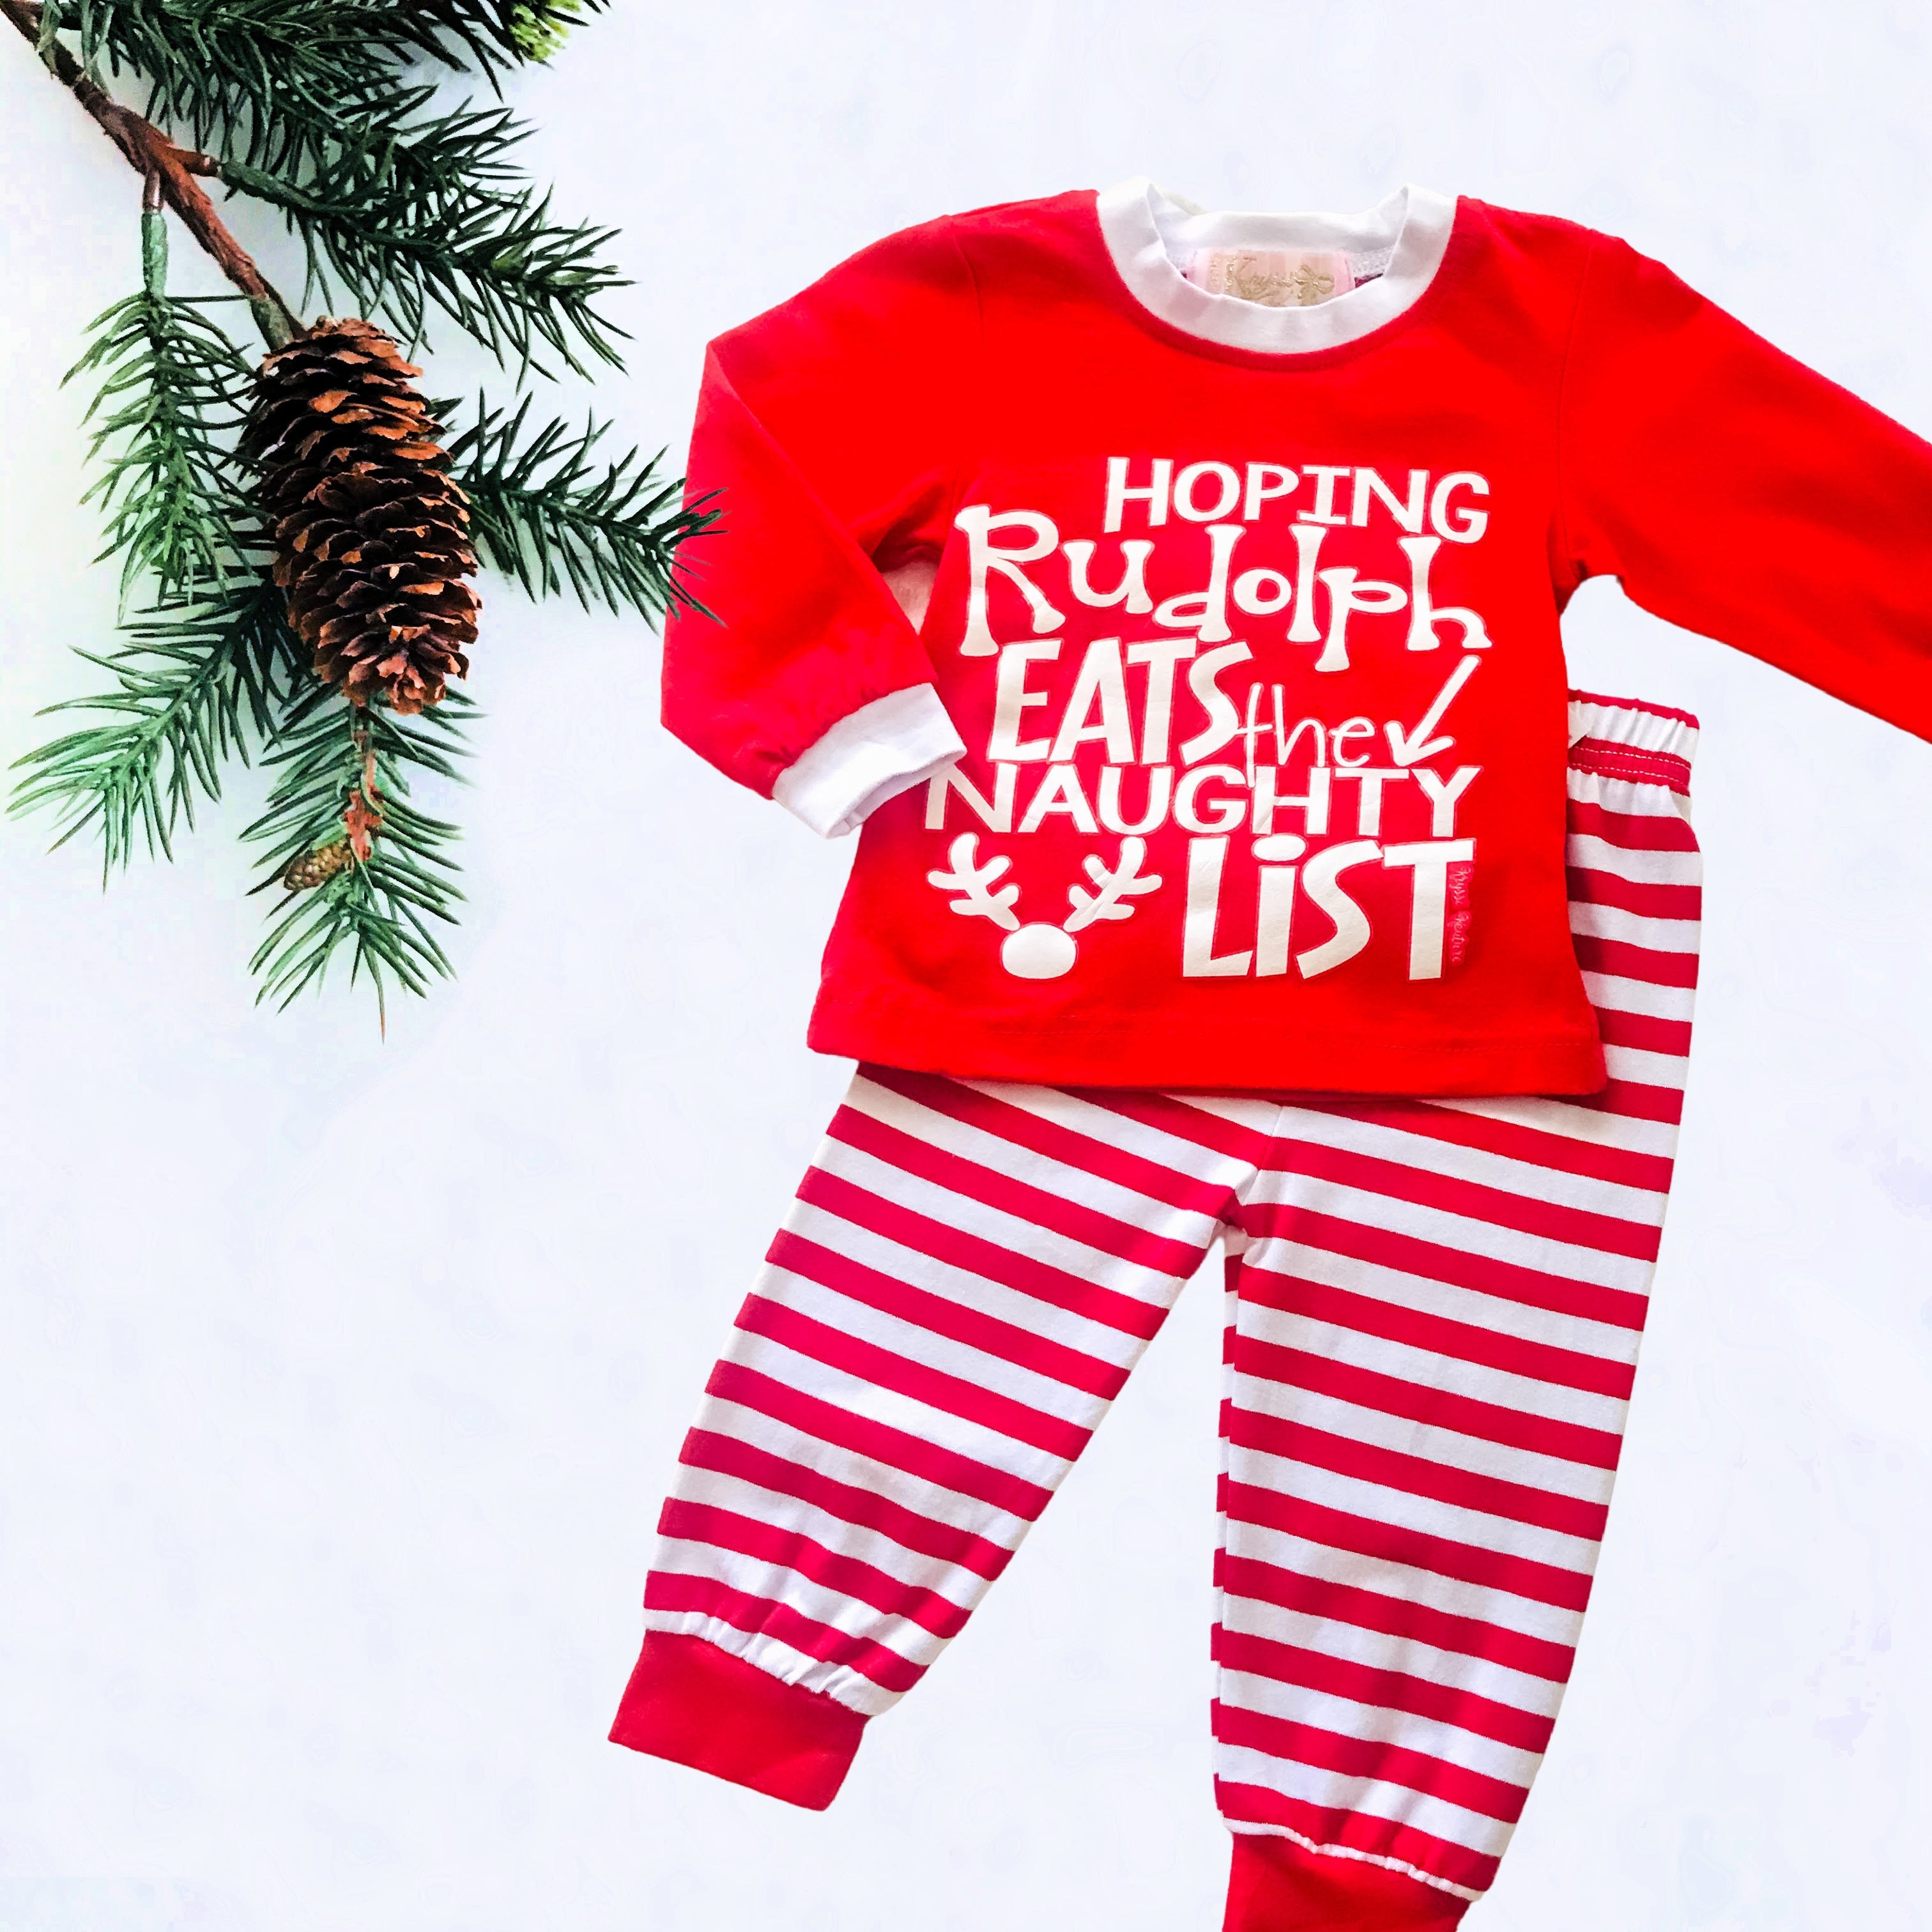 Hoping Rudolph Eats The Naughty List Kids Christmas Pajamas